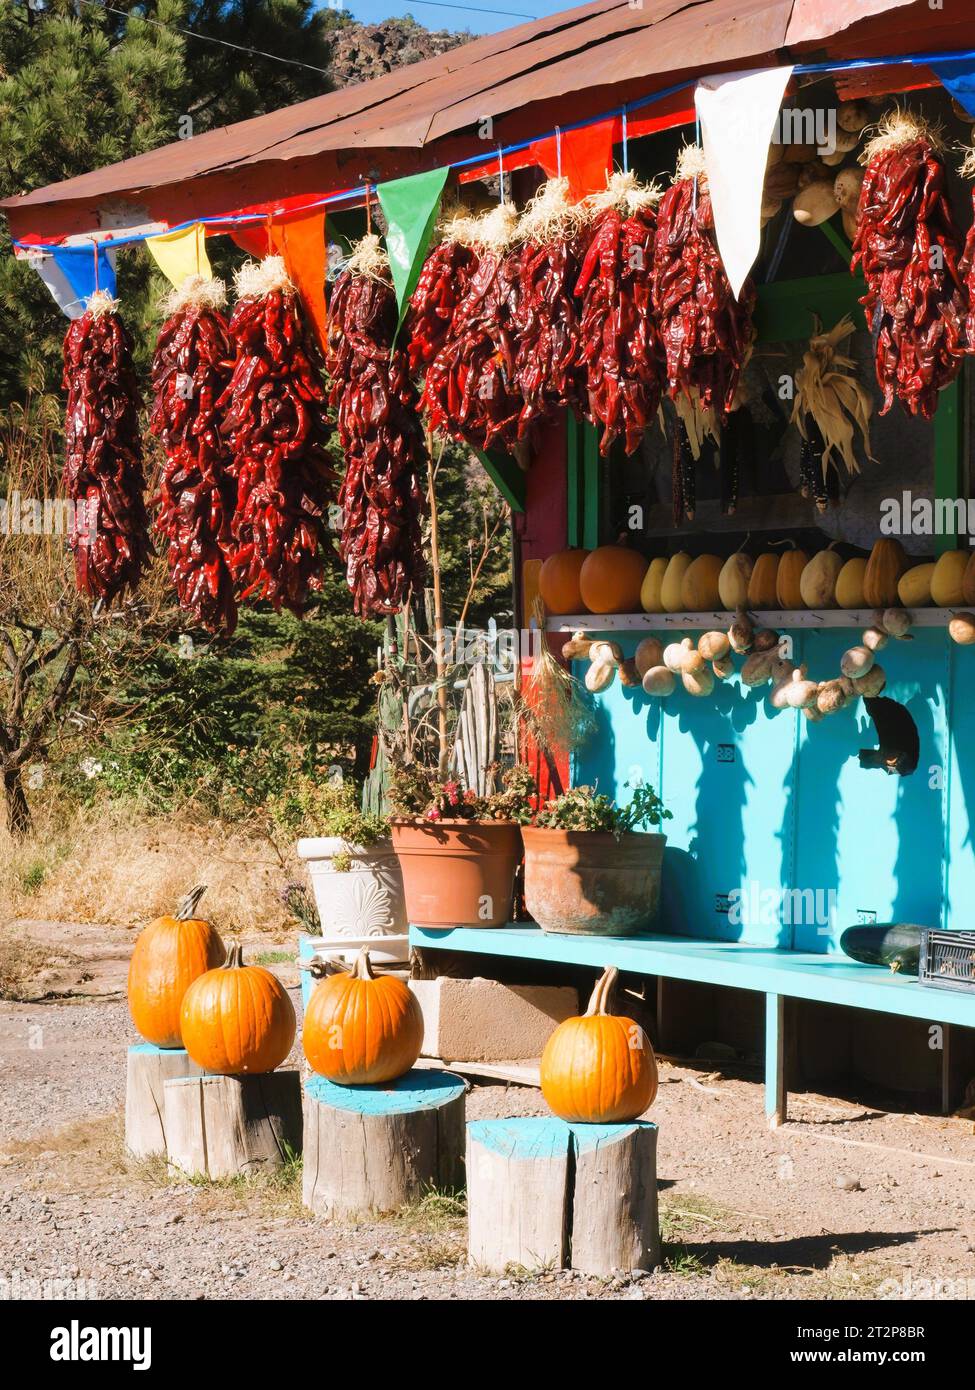 Colorful New Mexico autumn roadside market Stock Photo